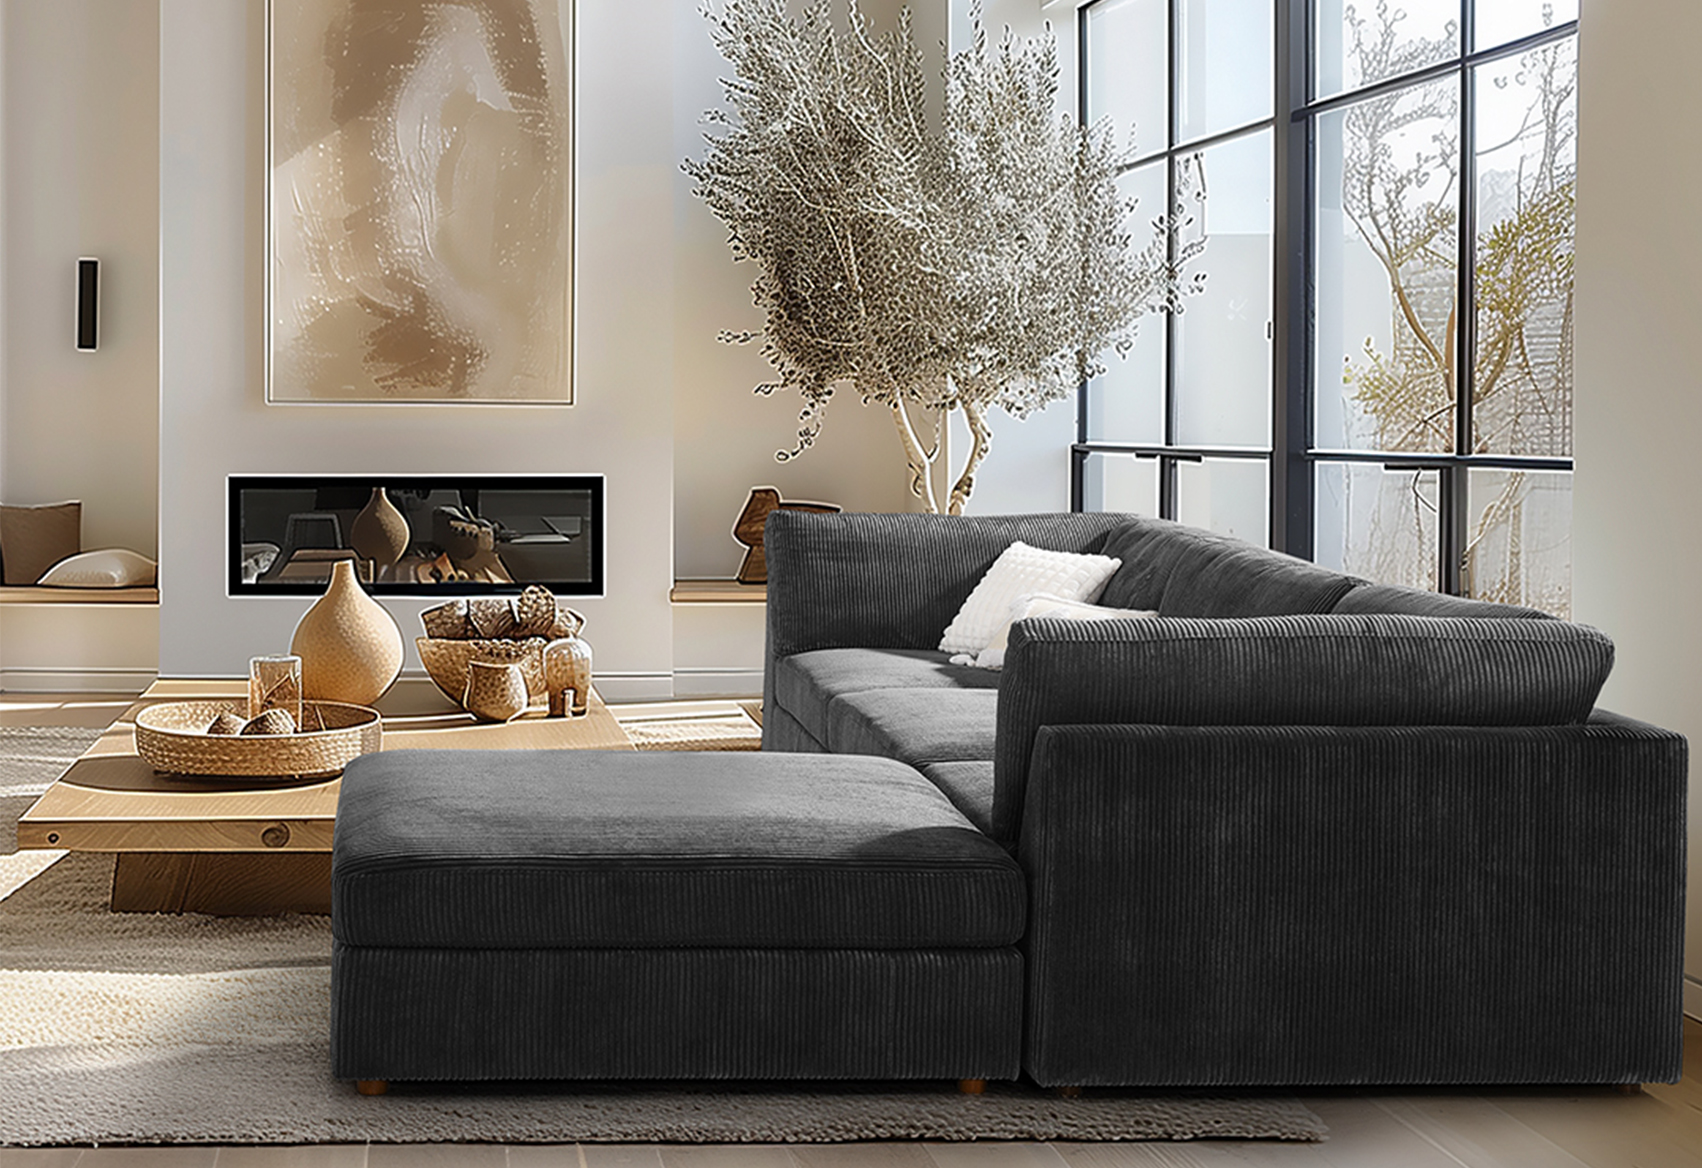 Six Advantages of Purchasing a Modular Sofa